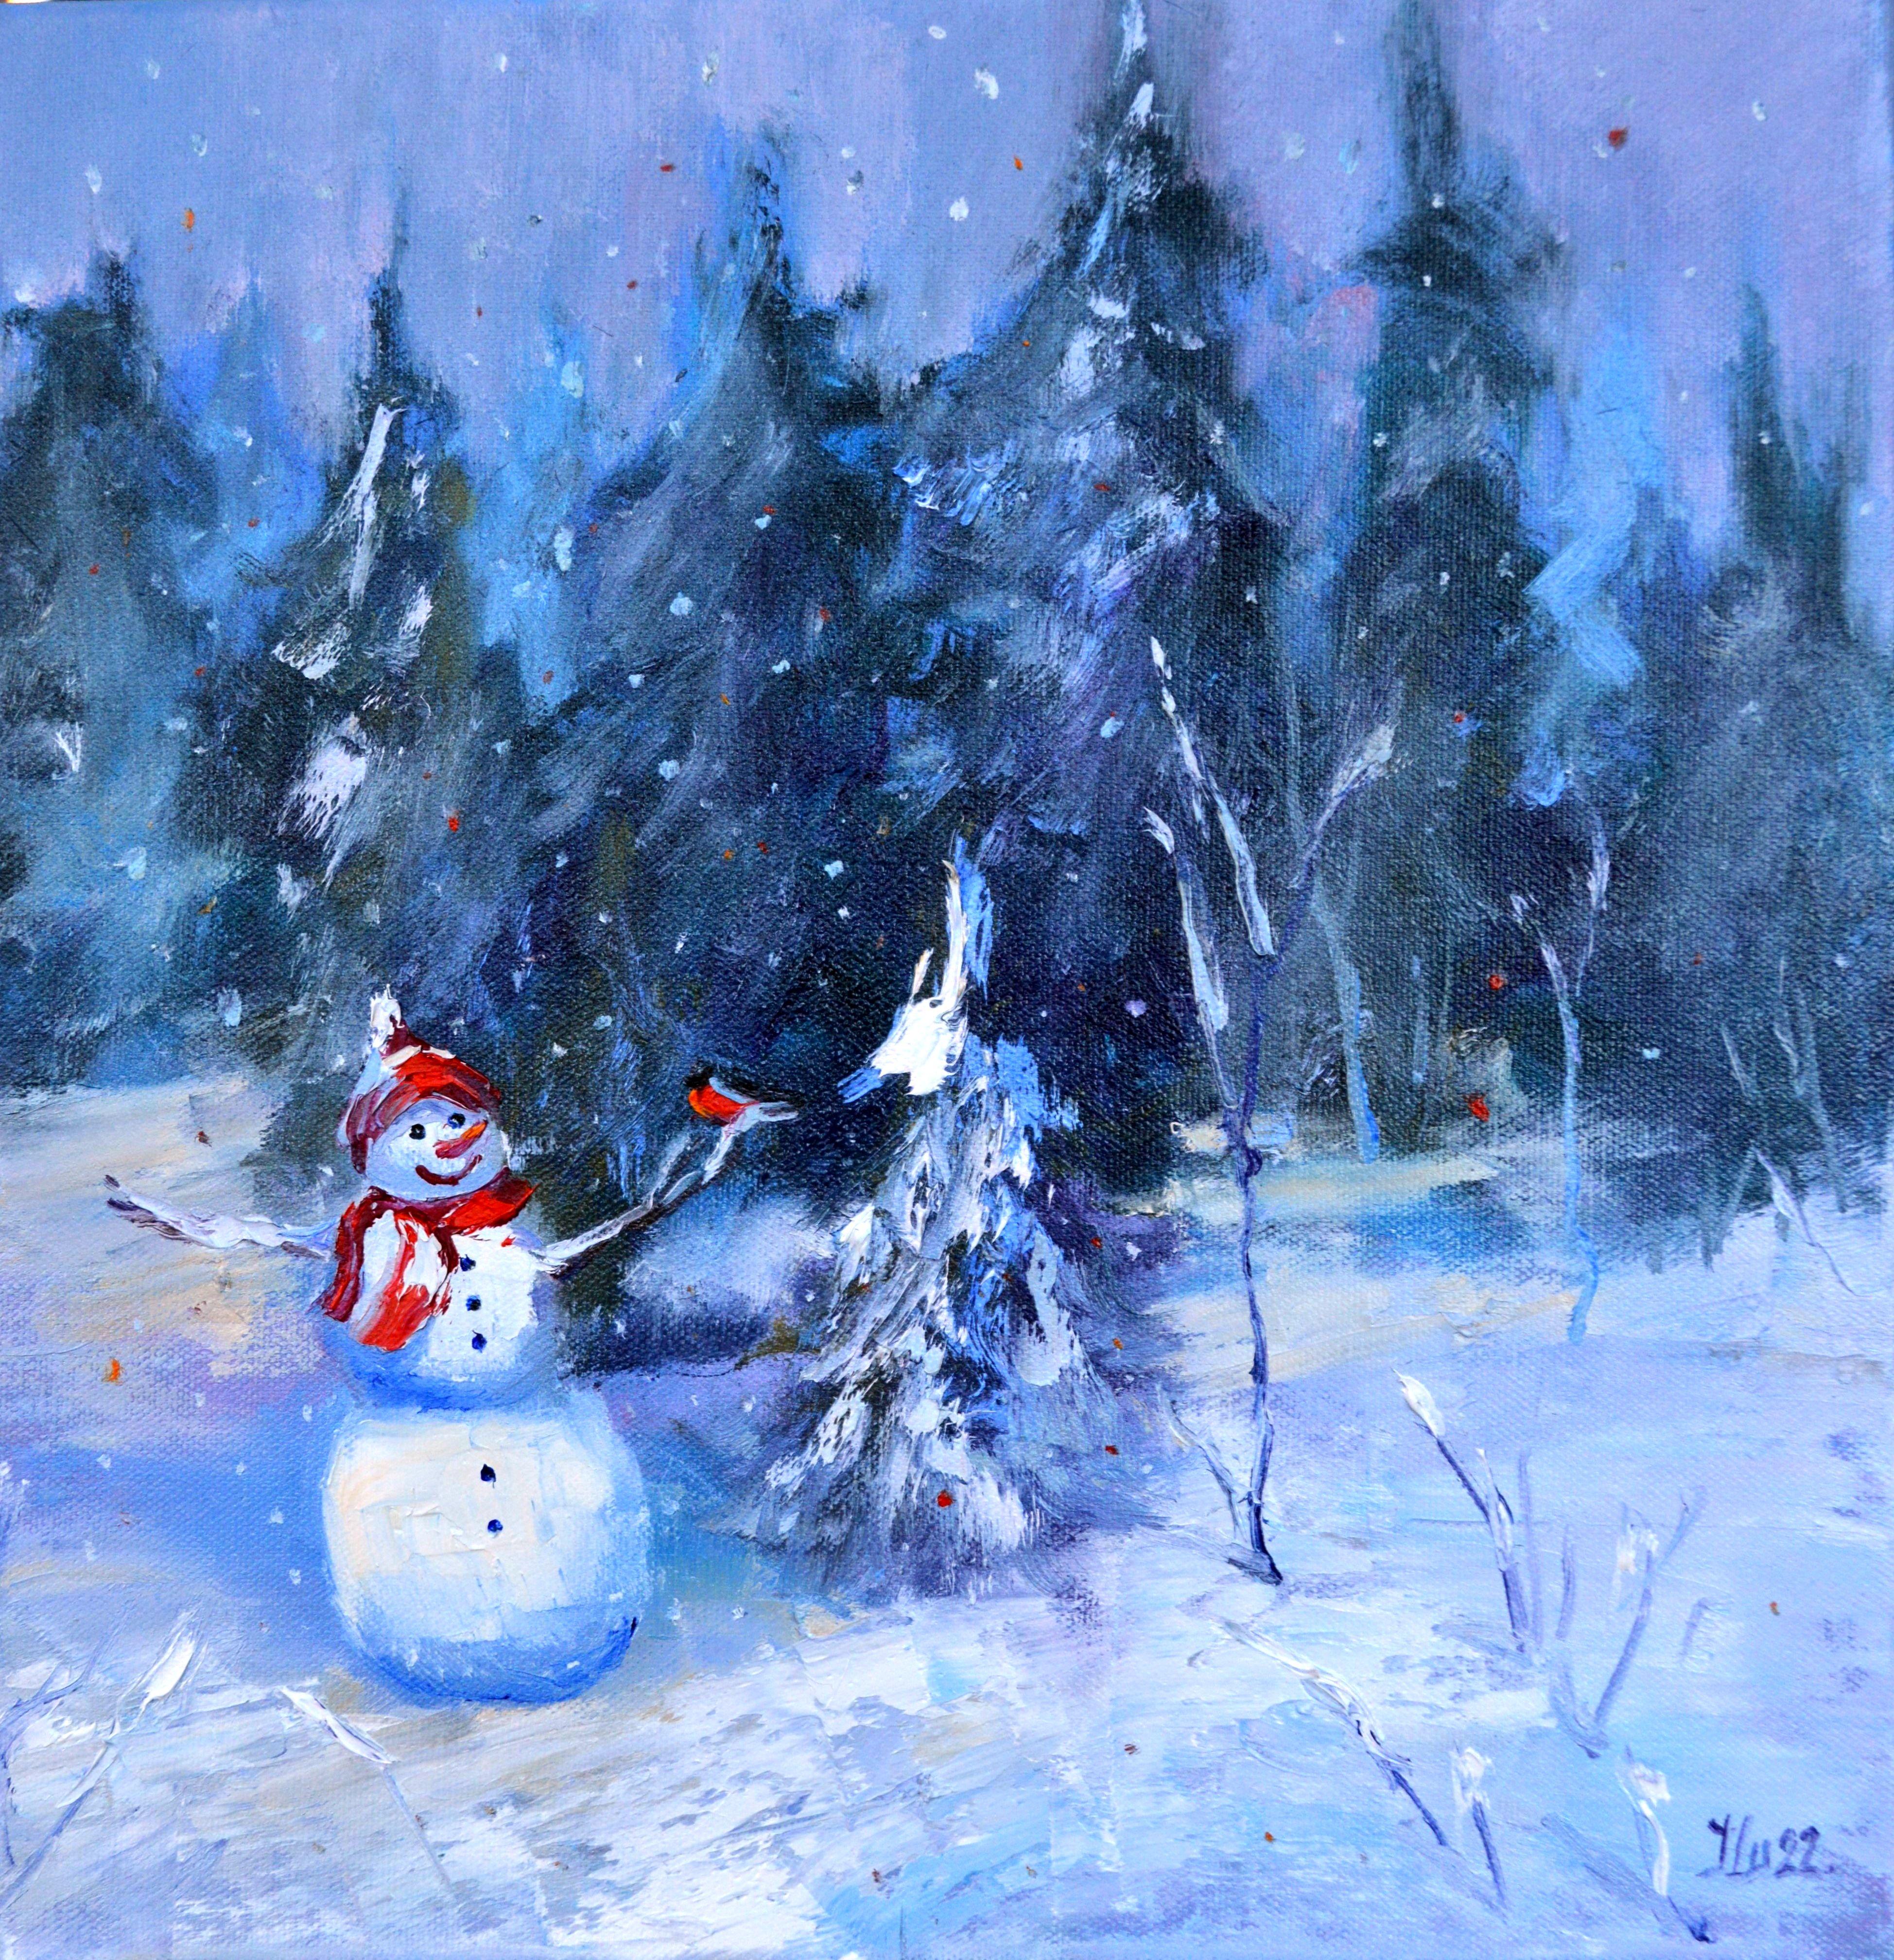 Snowman and Christmas trees